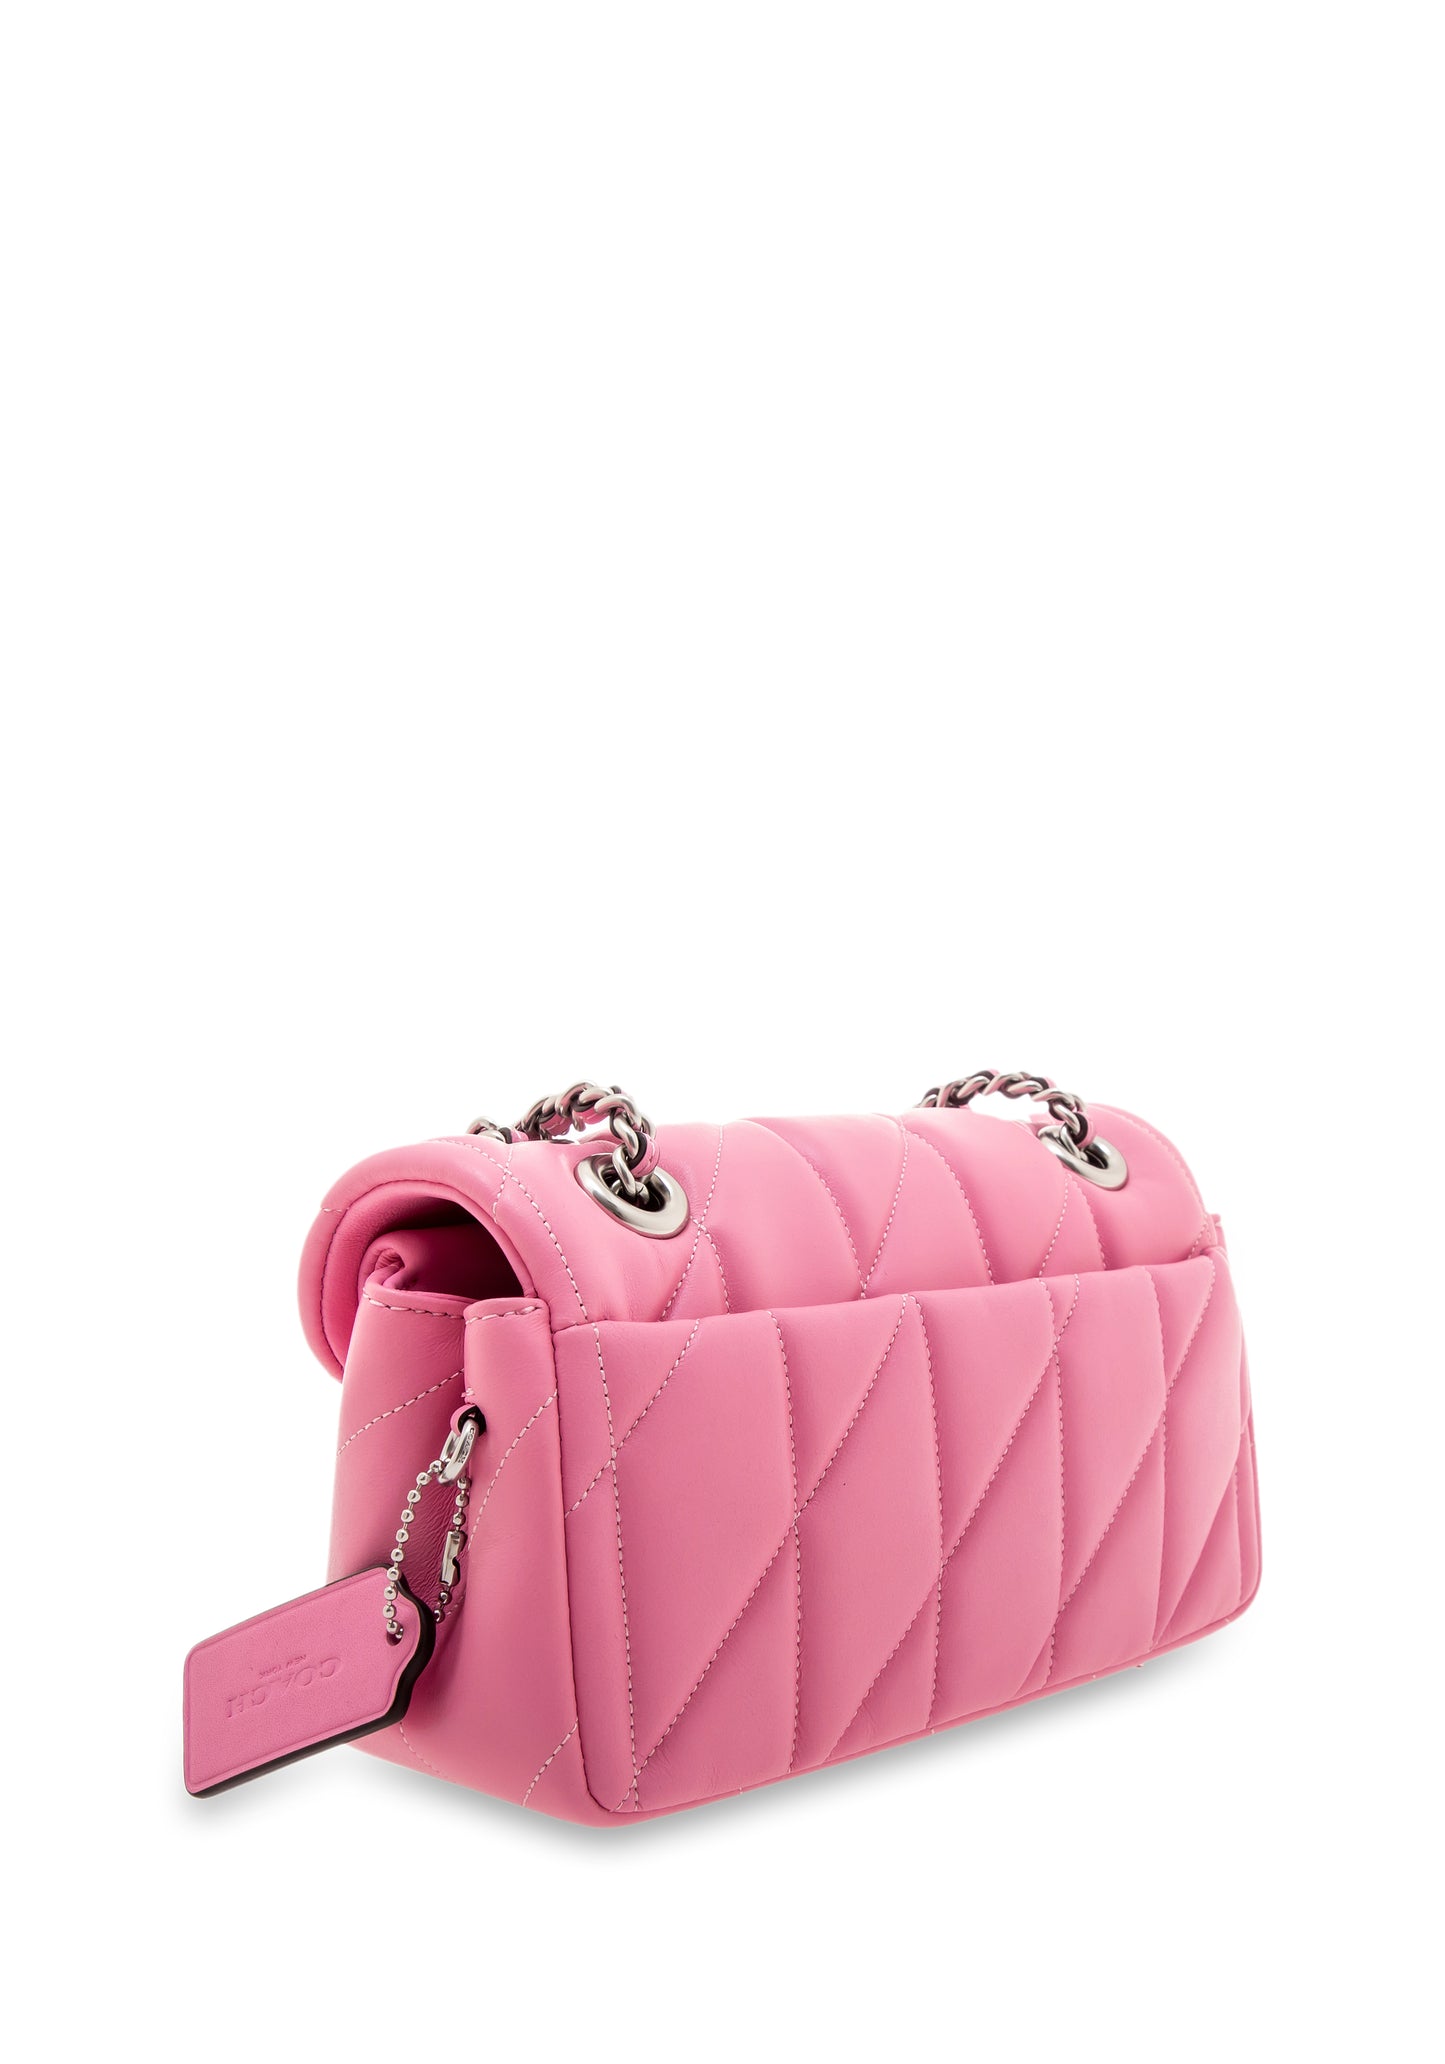 Tabby Quilted Shoulder Bag vivid pink | Bildmaterial bereitgestellt von SHOES.PLEASE.